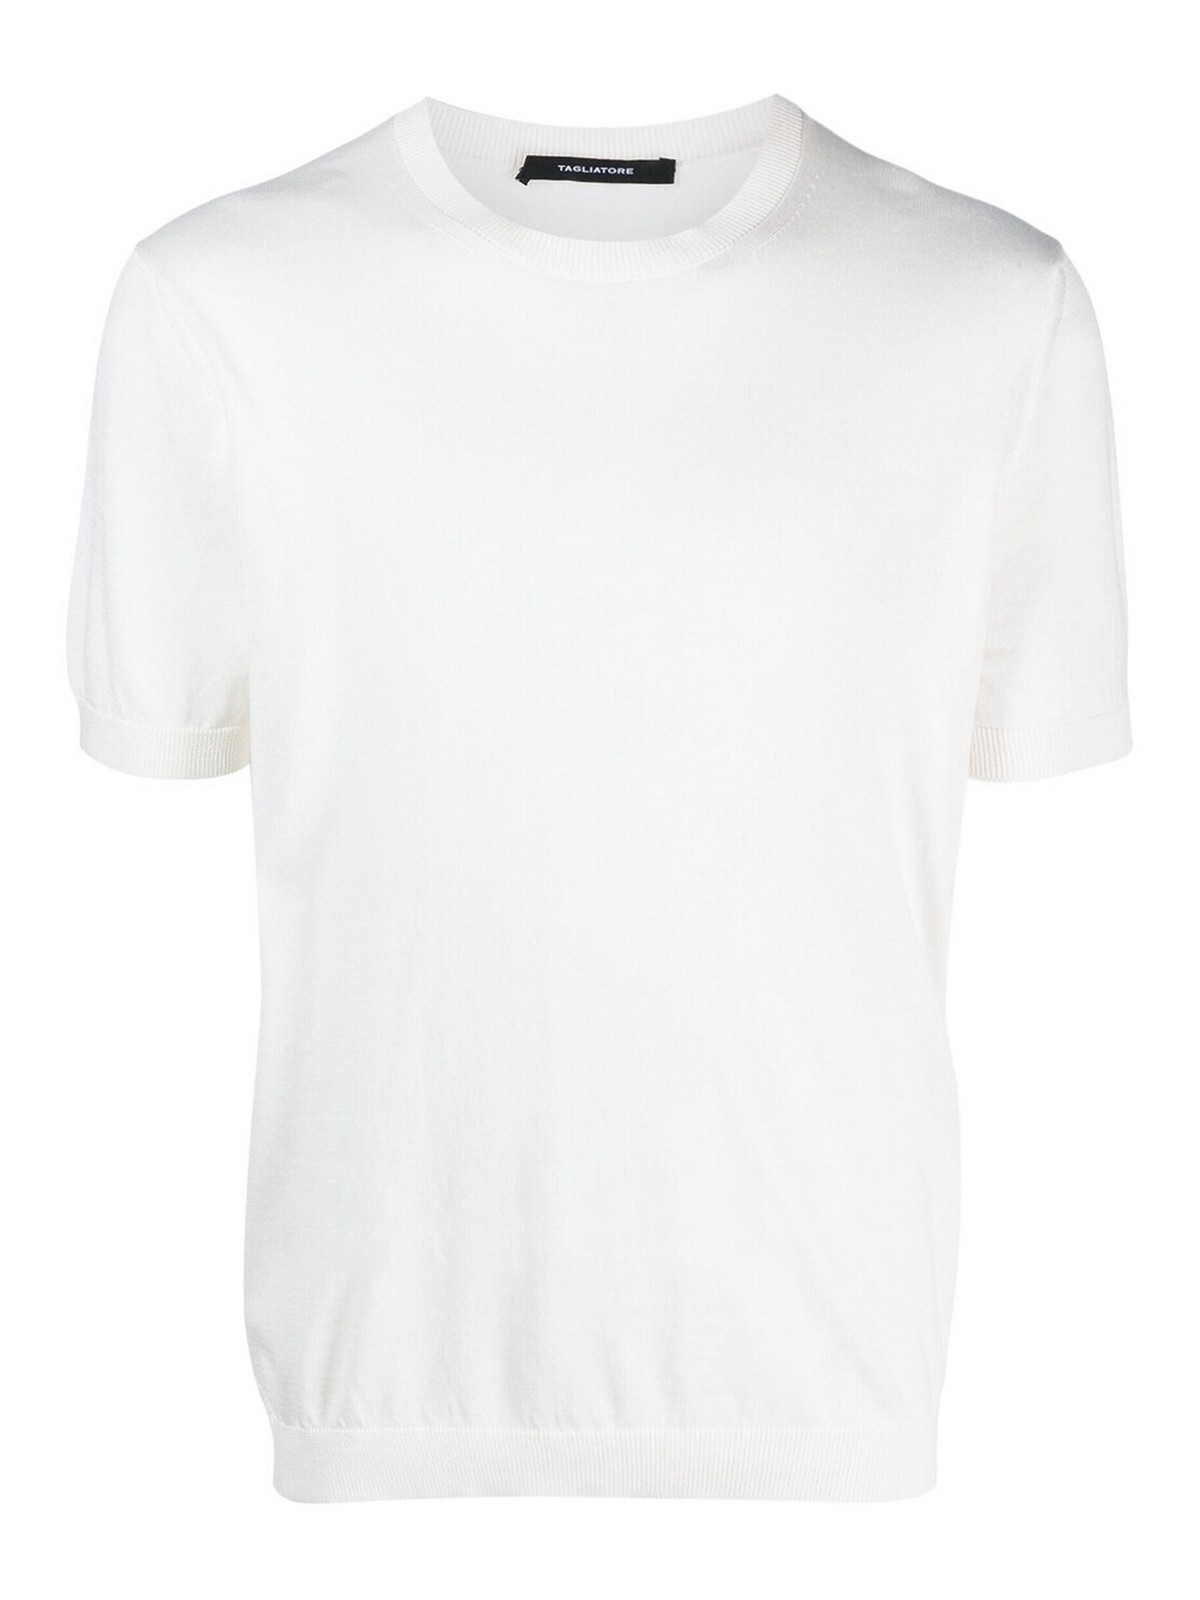 Tagliatore T-shirt S White